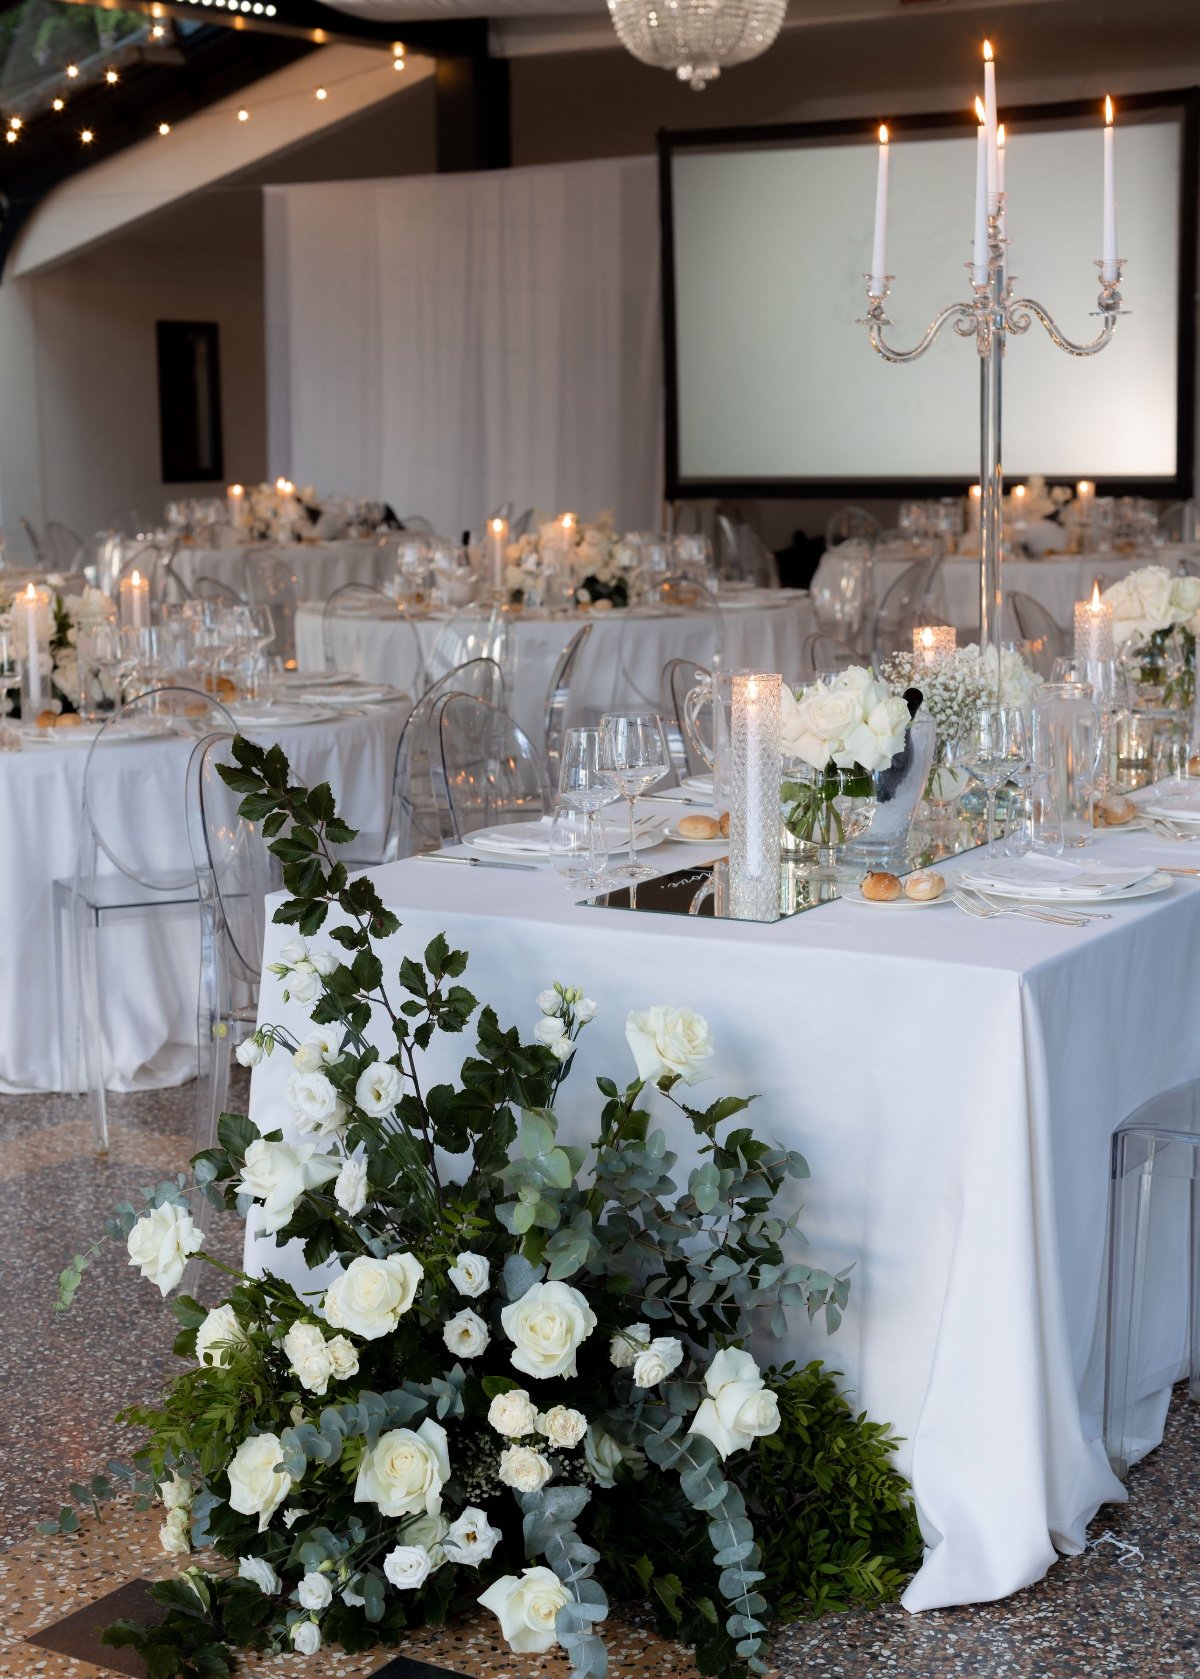 Classic white and acrylic wedding reception